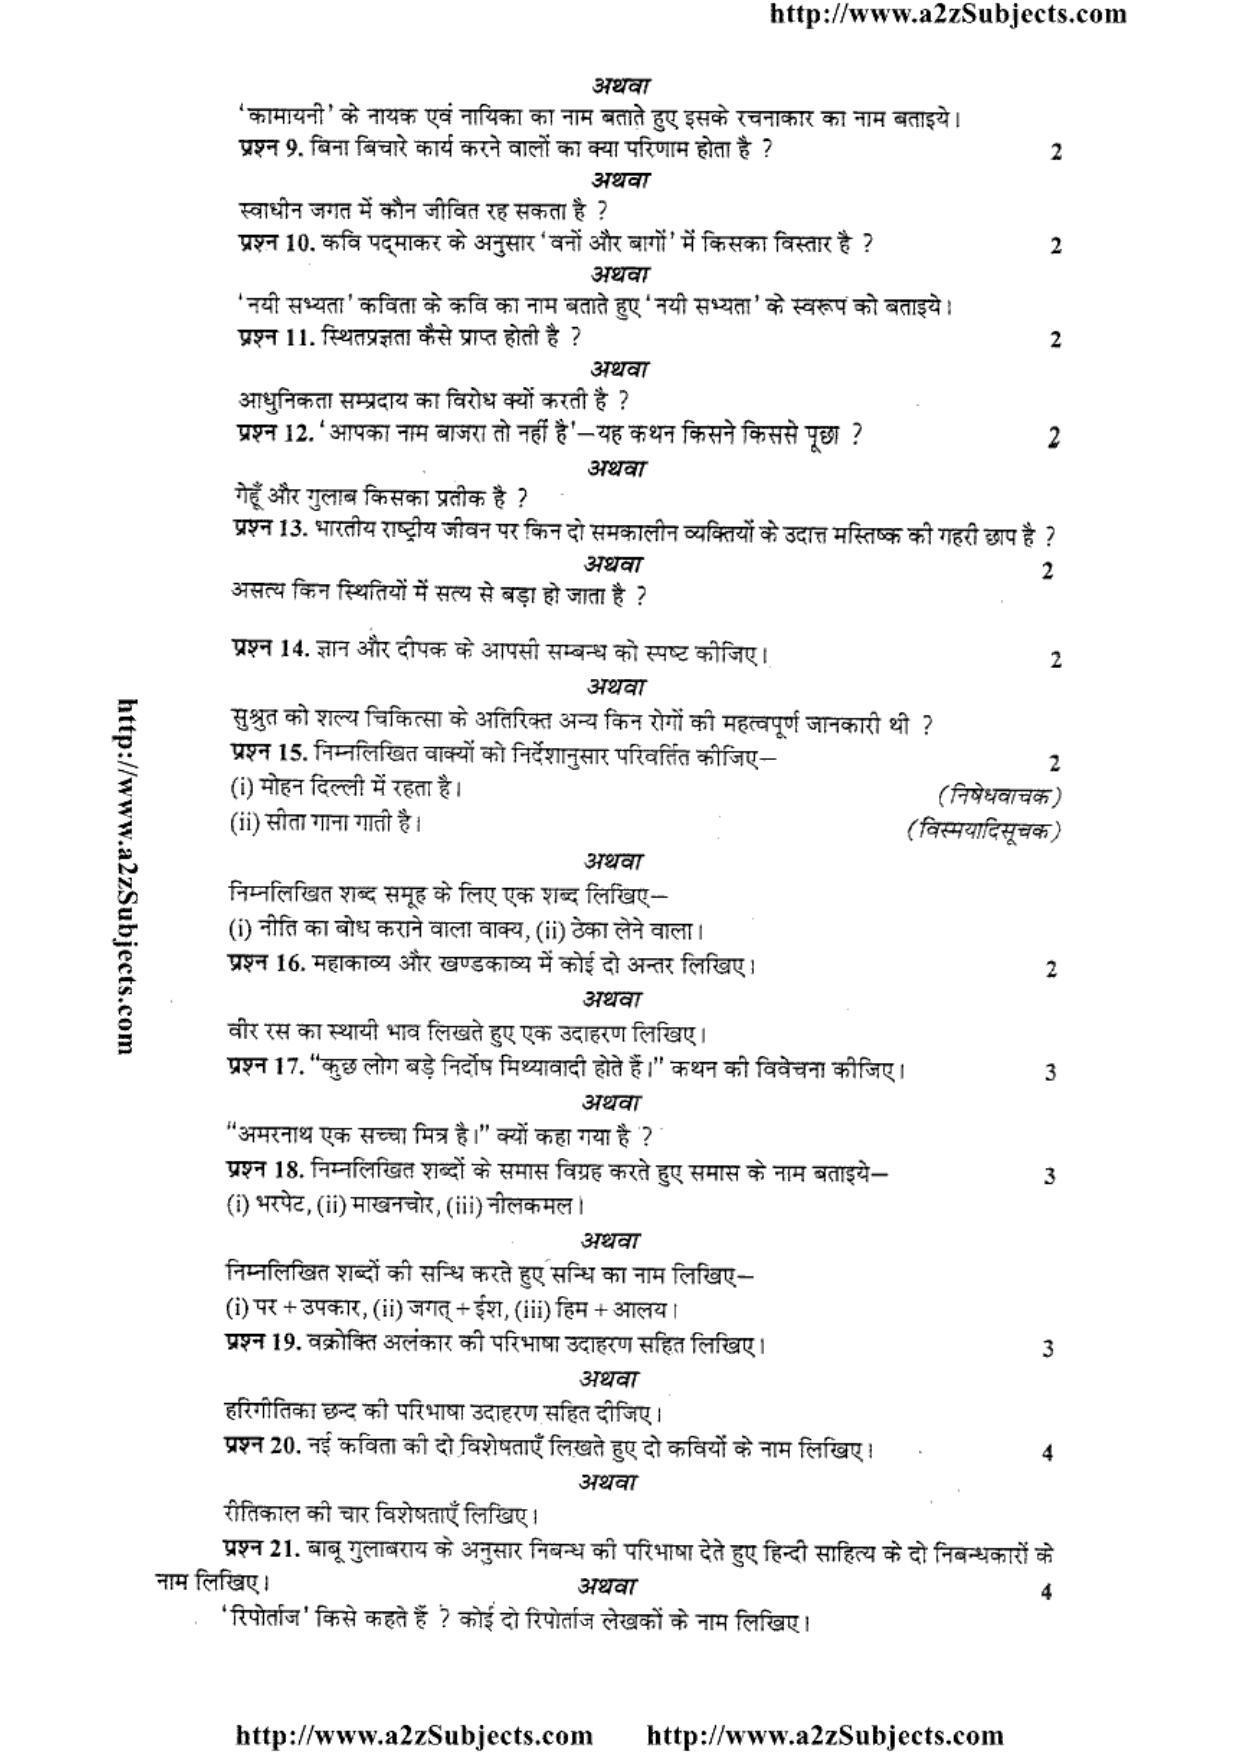 MP Board Class 10 Hindi (Hindi Medium) 2016 Question Paper - Page 2